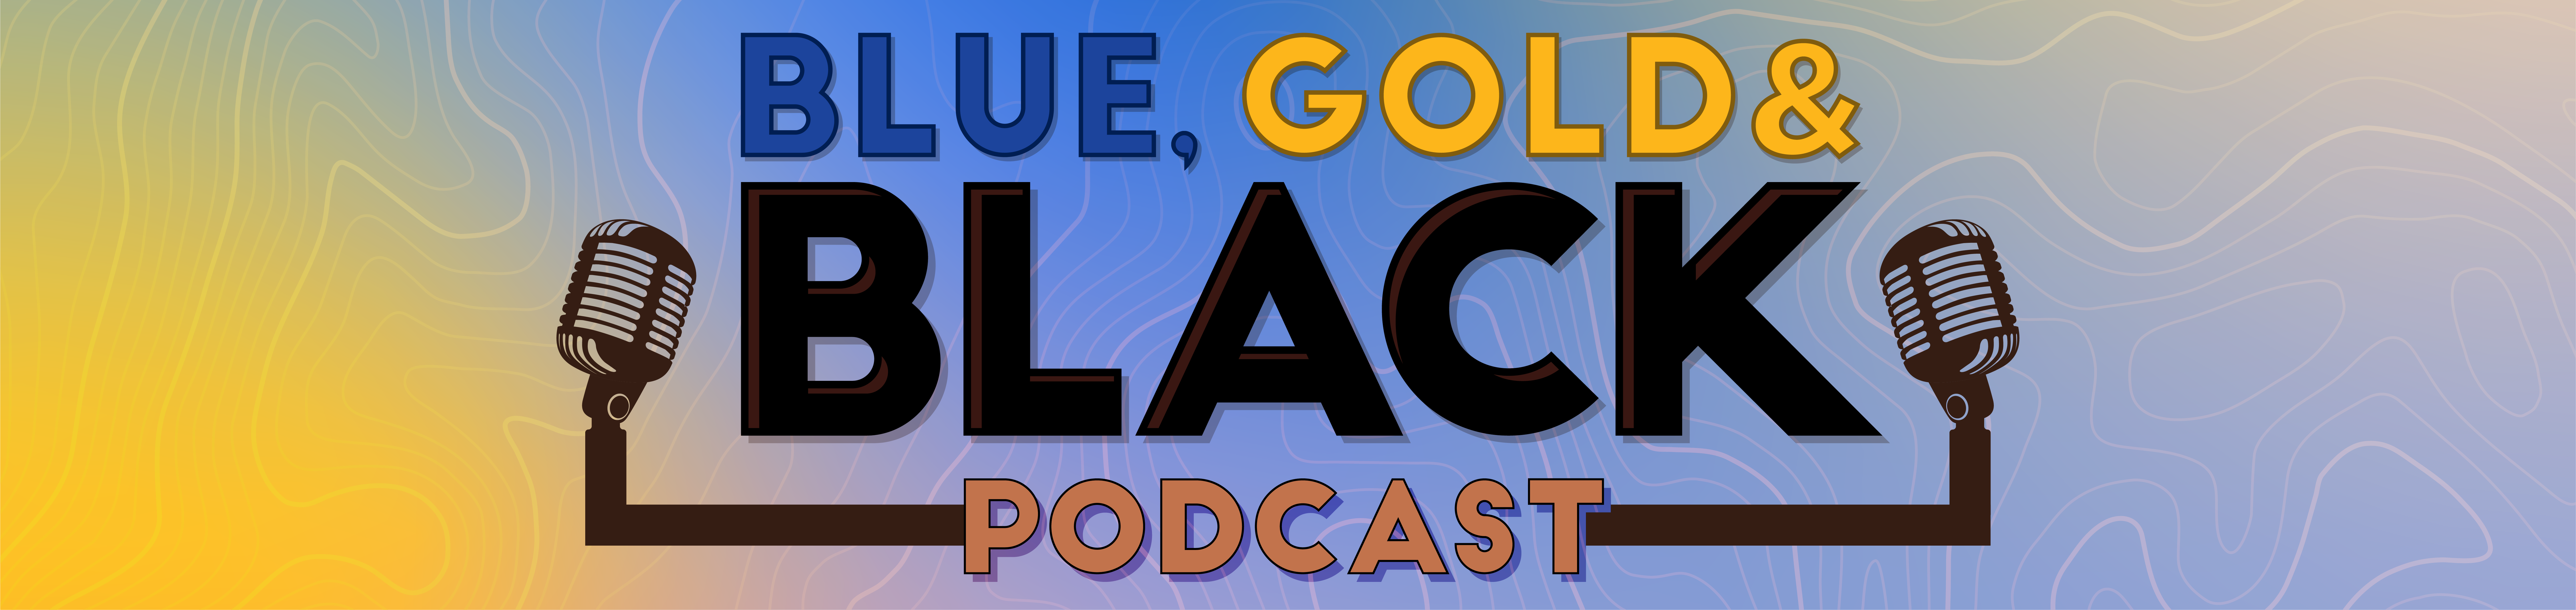 Blue, Gold & BLACK Podcast